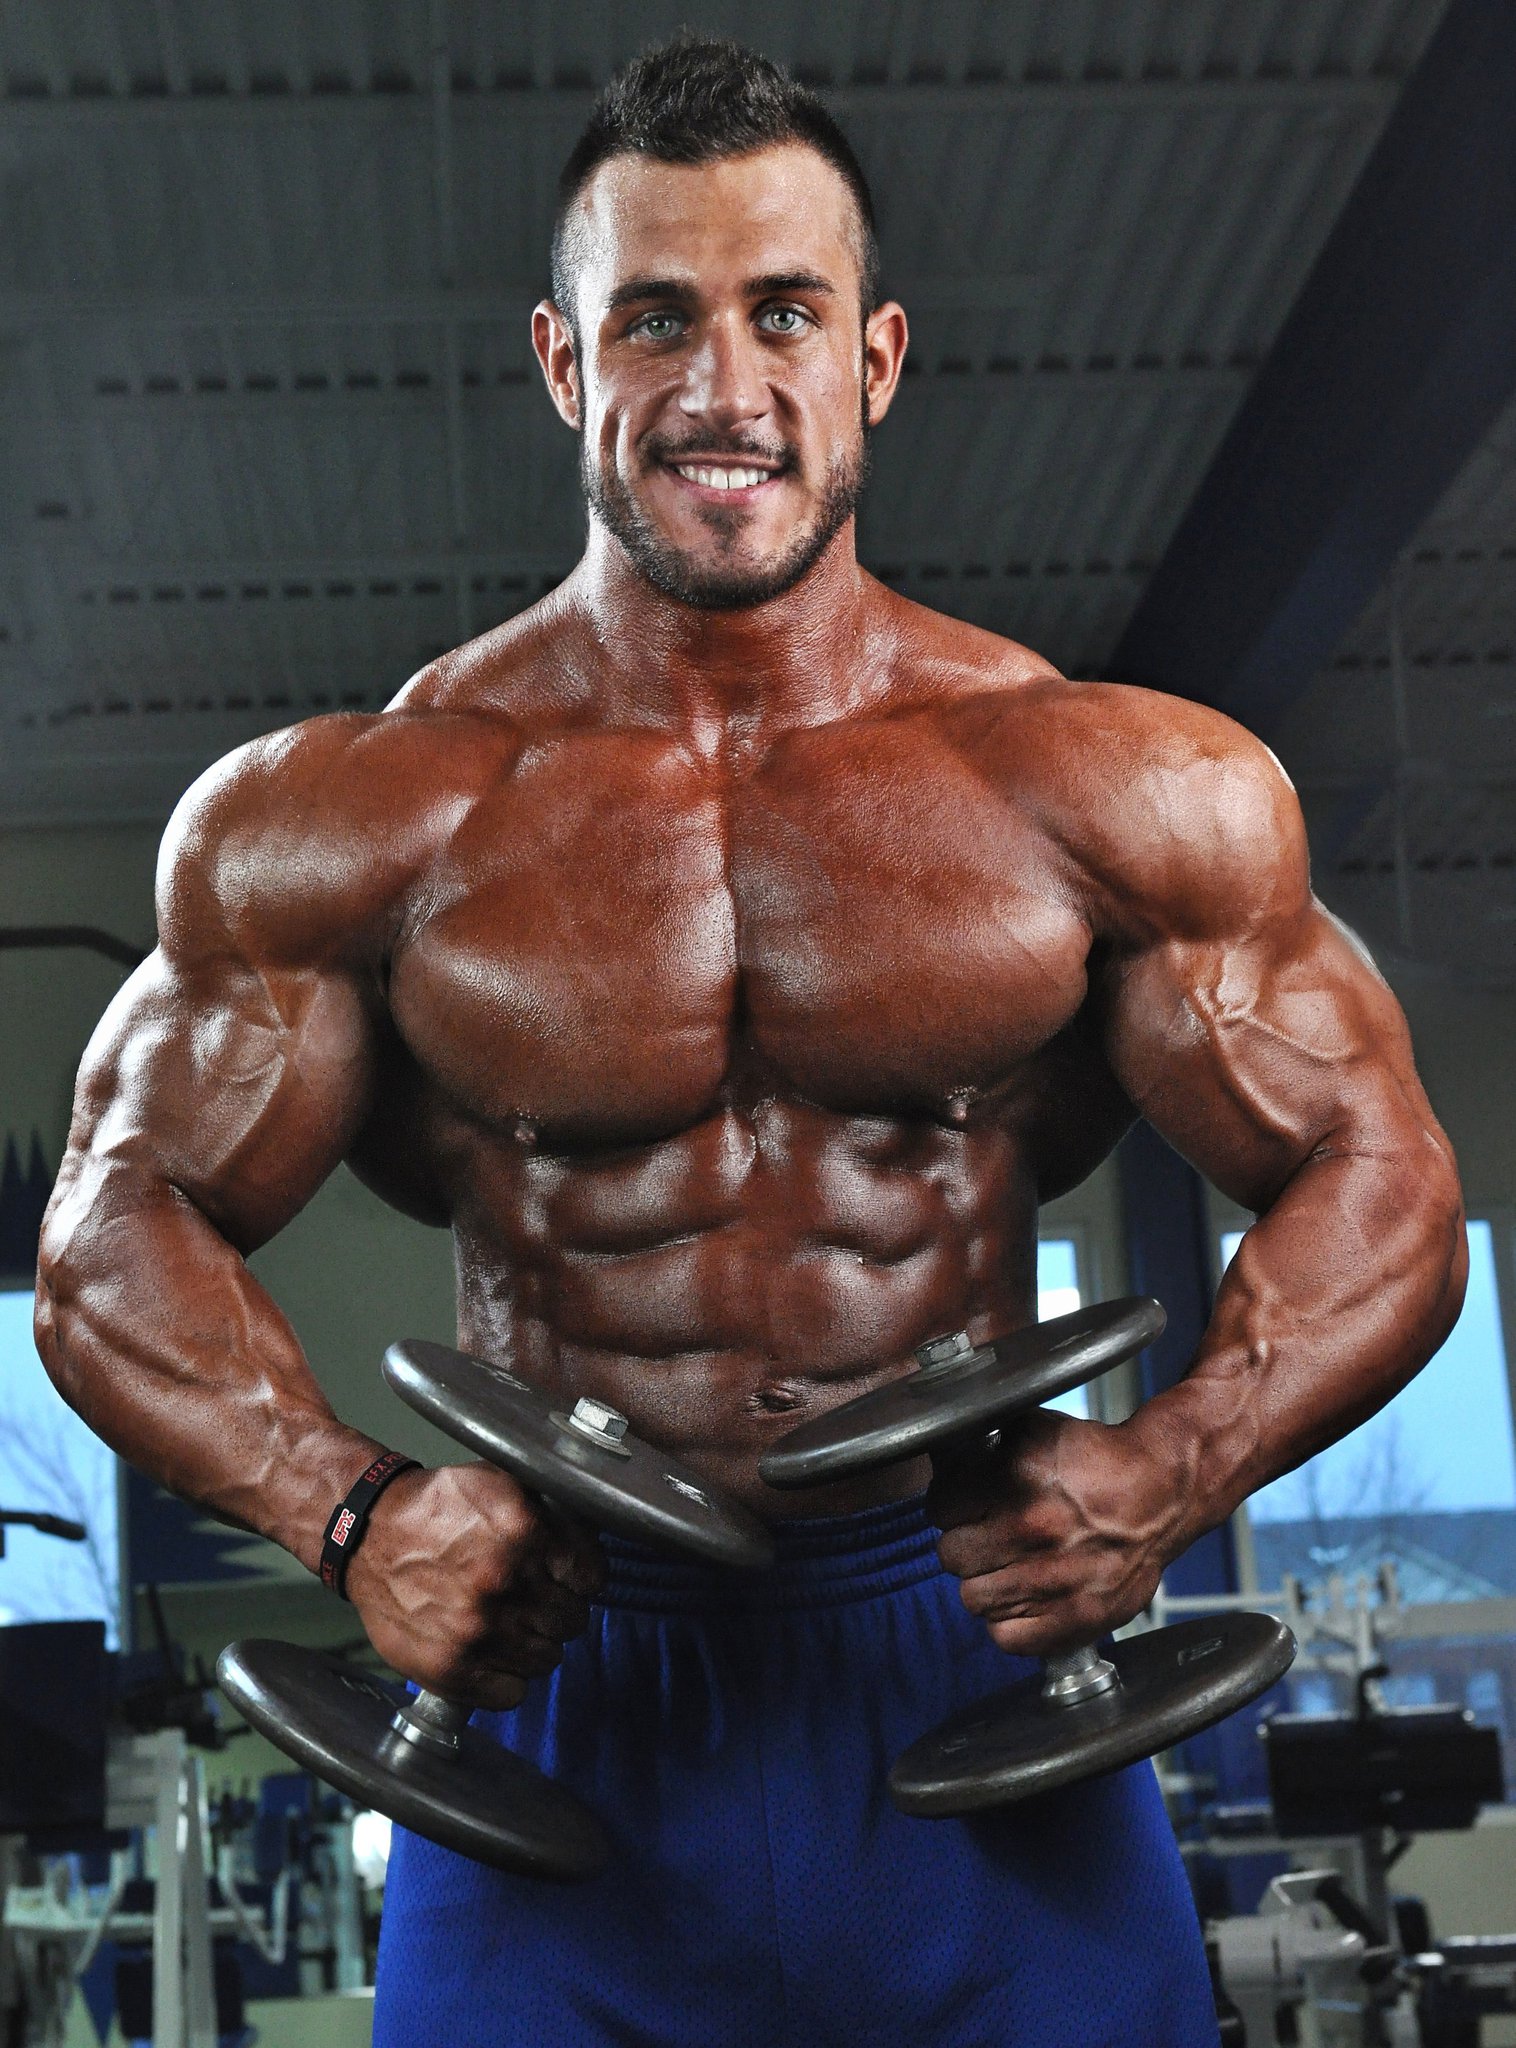 Bodybuilder muscle